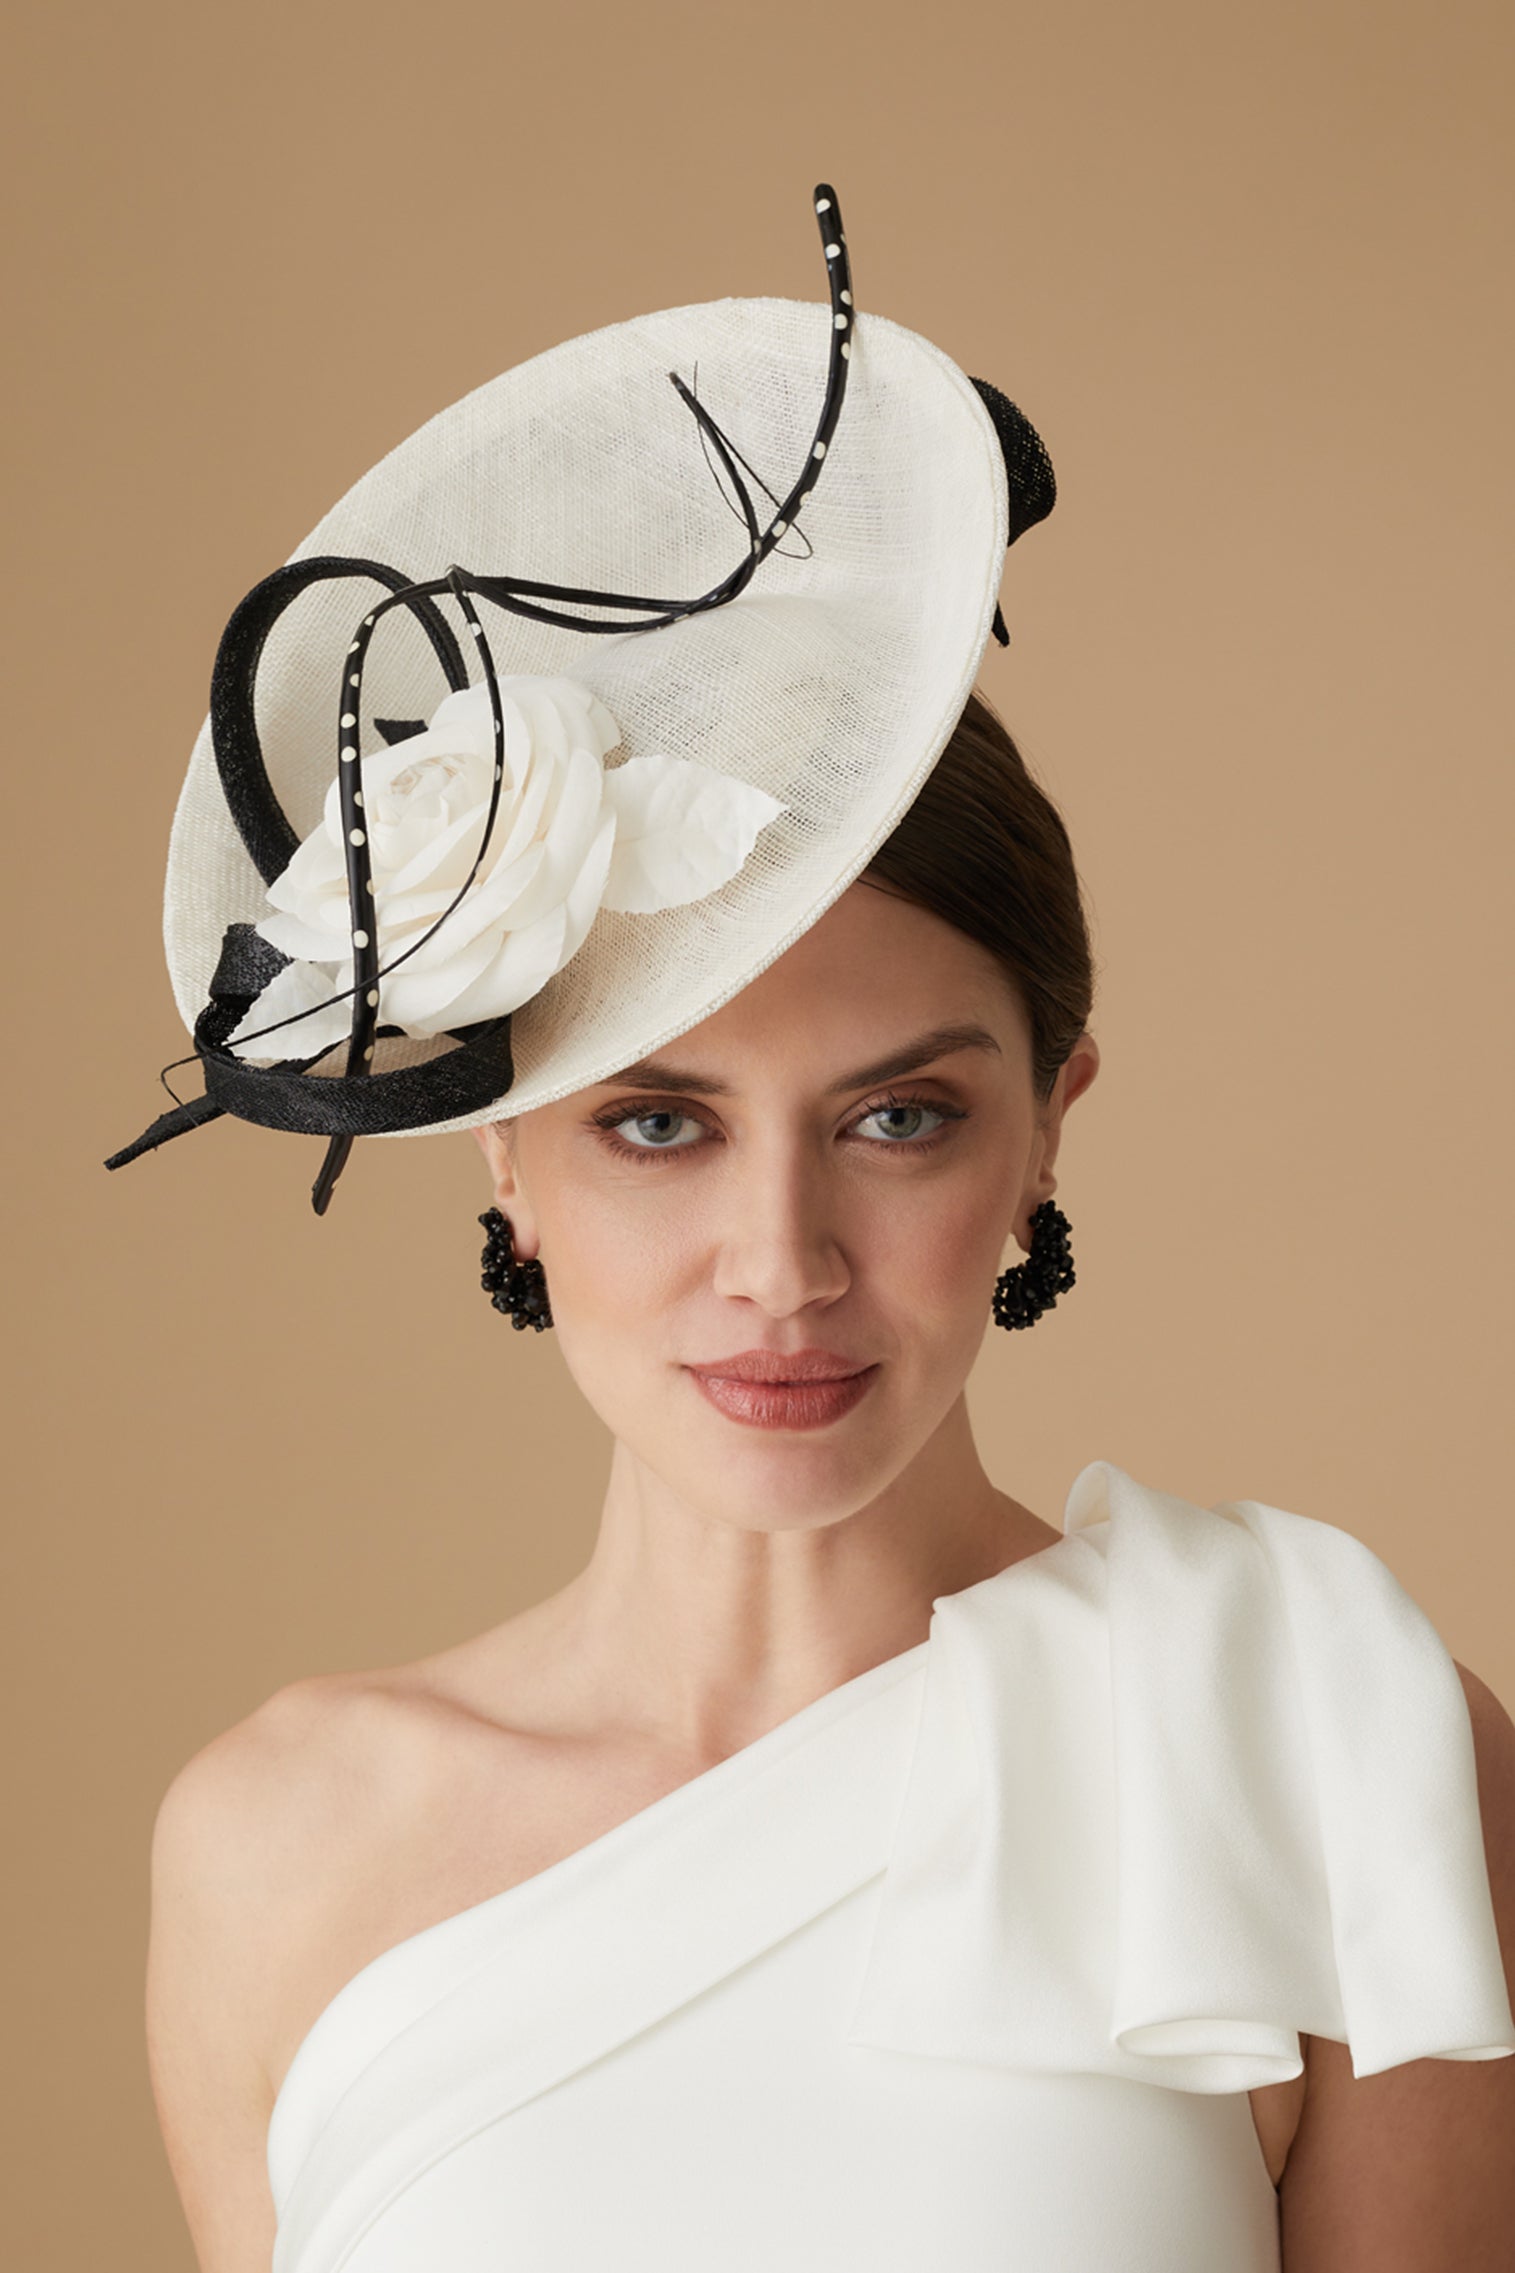 Assam White and Black Saucer Hat - Women’s Hats - Lock & Co. Hatters London UK